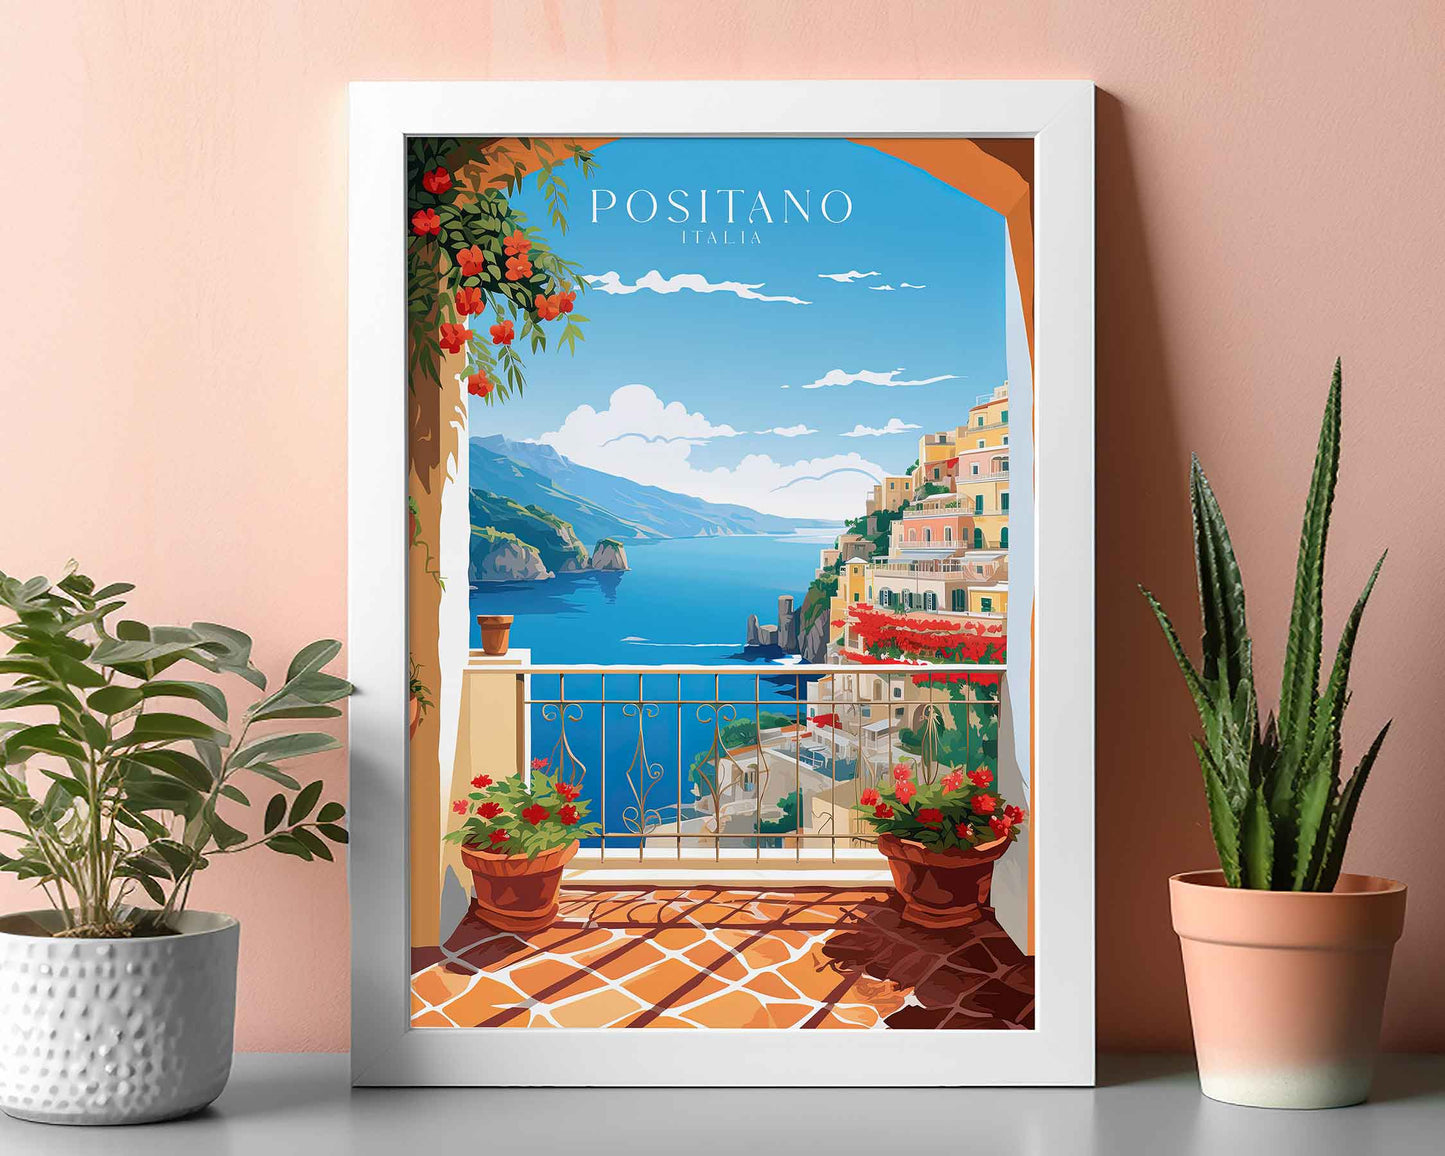 Framed Image of Positano Italy Travel Poster Illustration Prints Wall Art